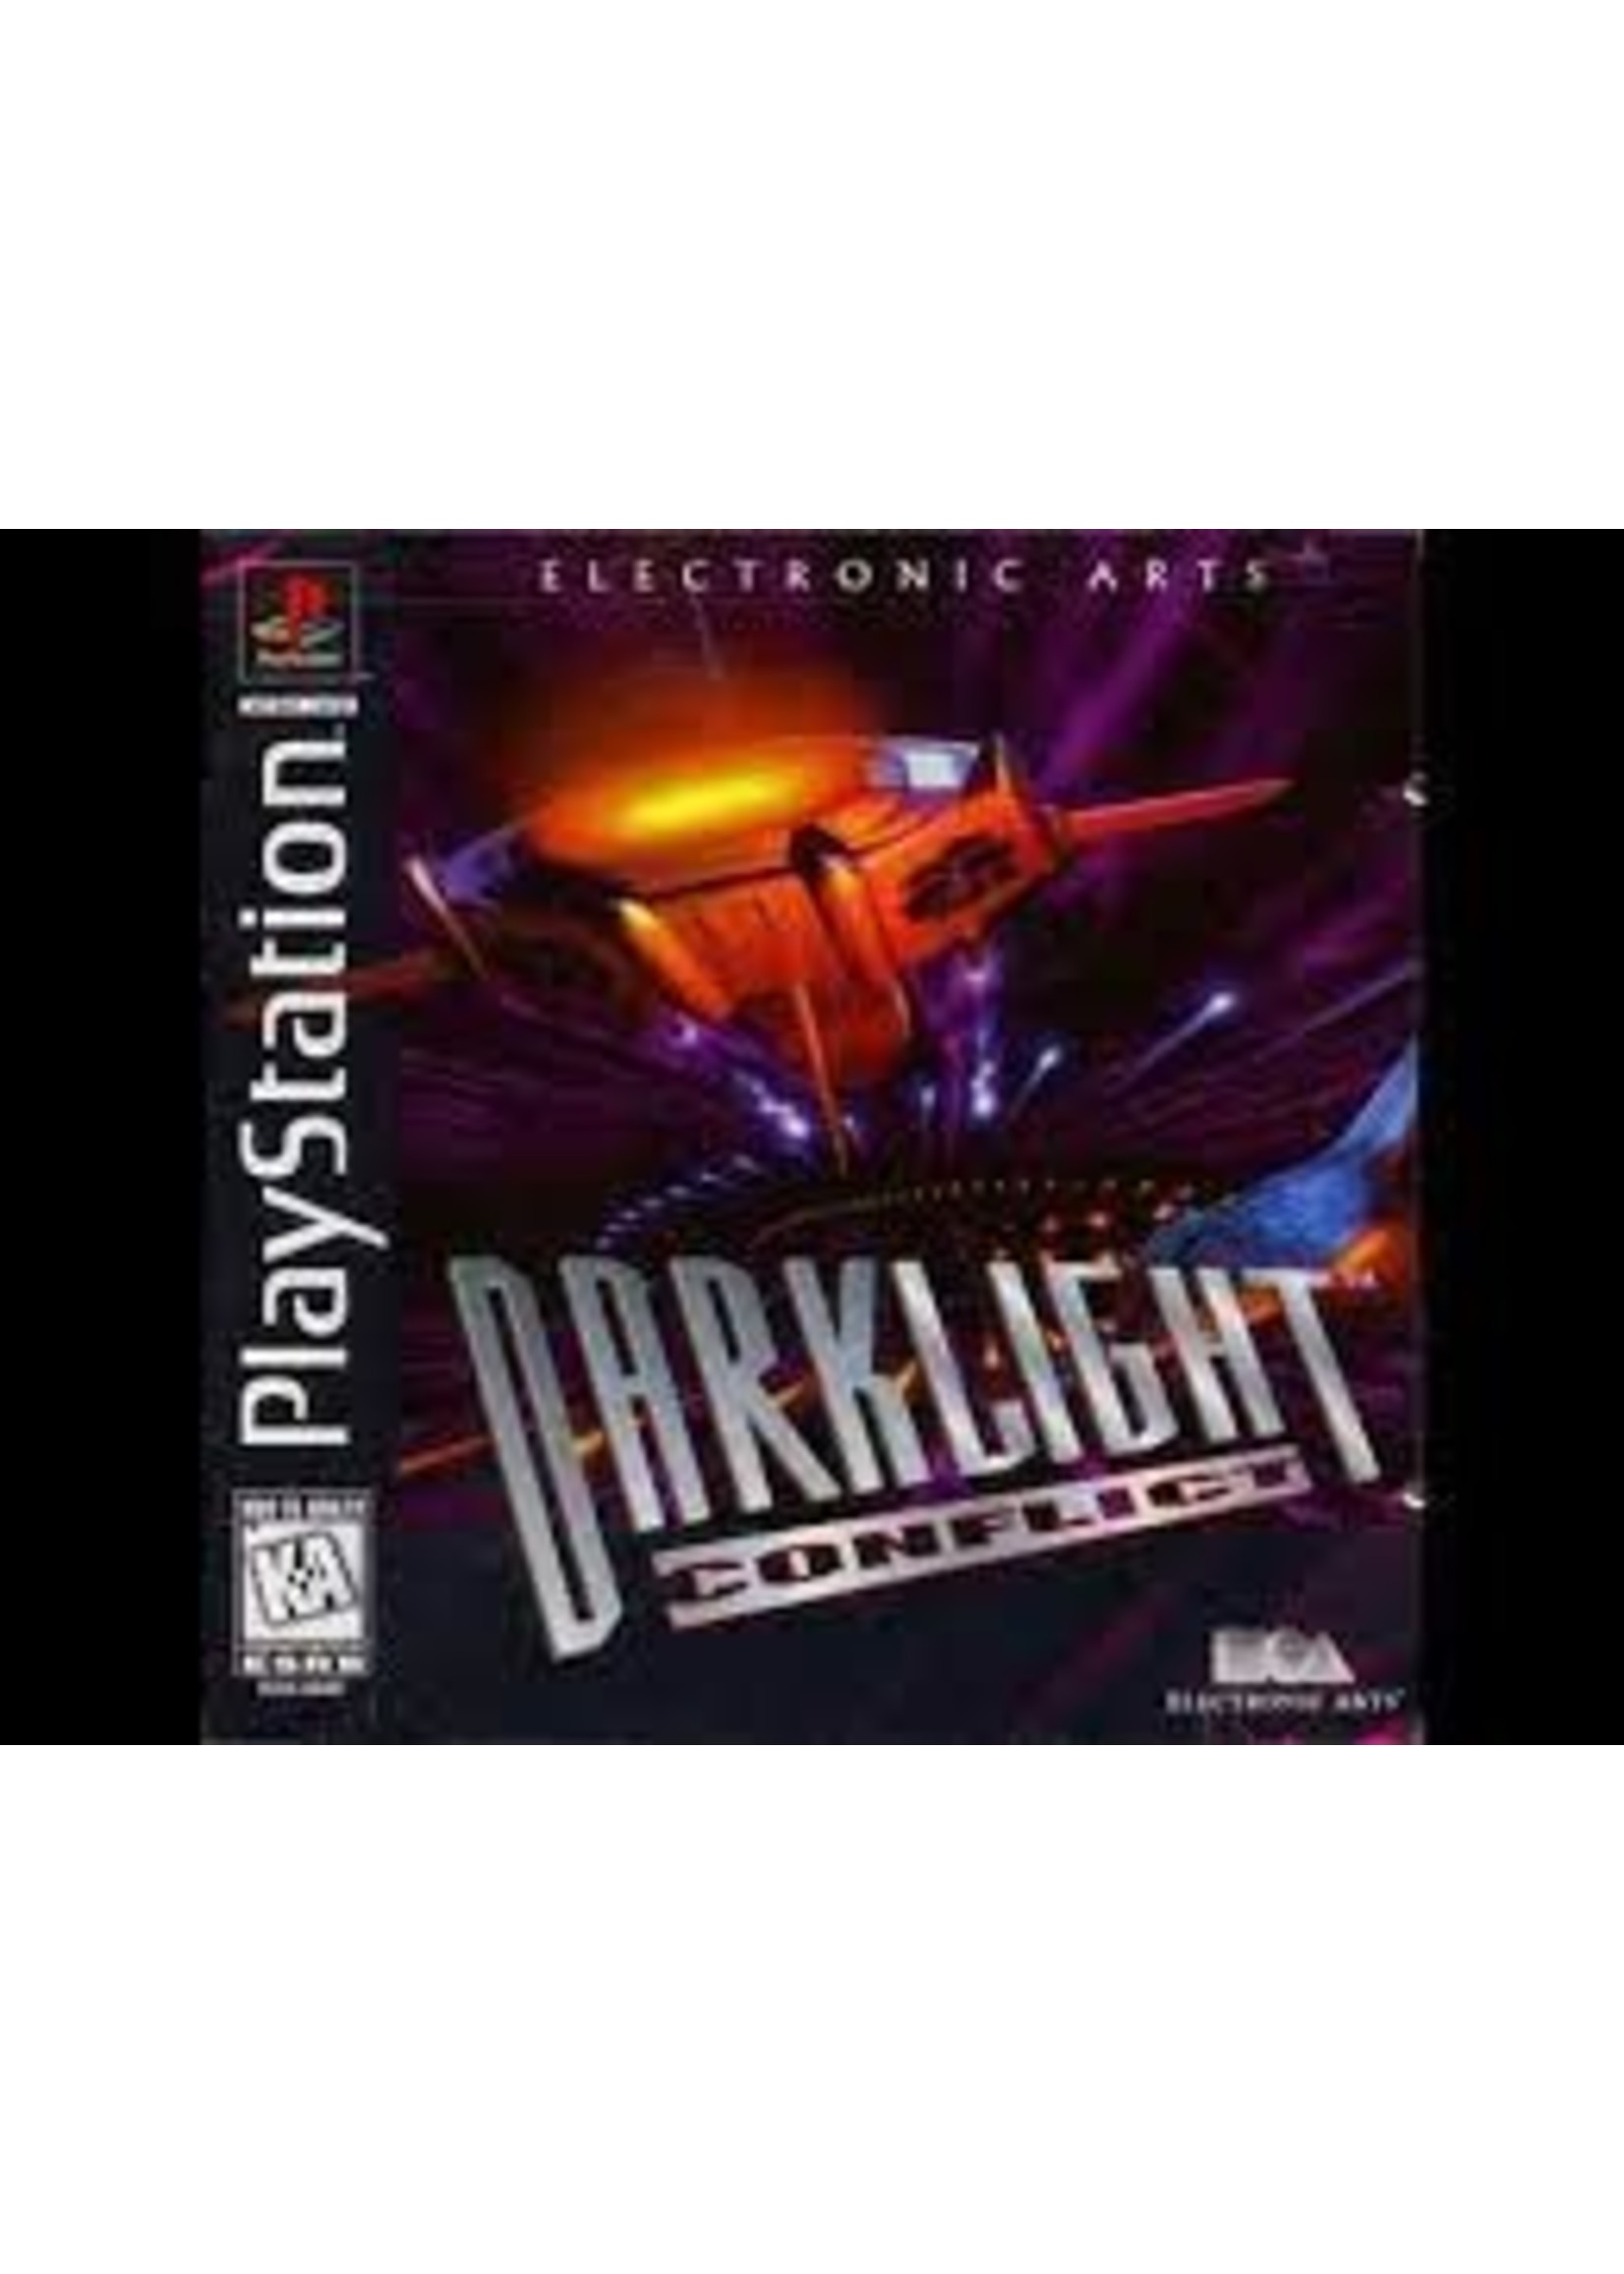 Sony Playstation 1 (PS1) Darklight Conflict